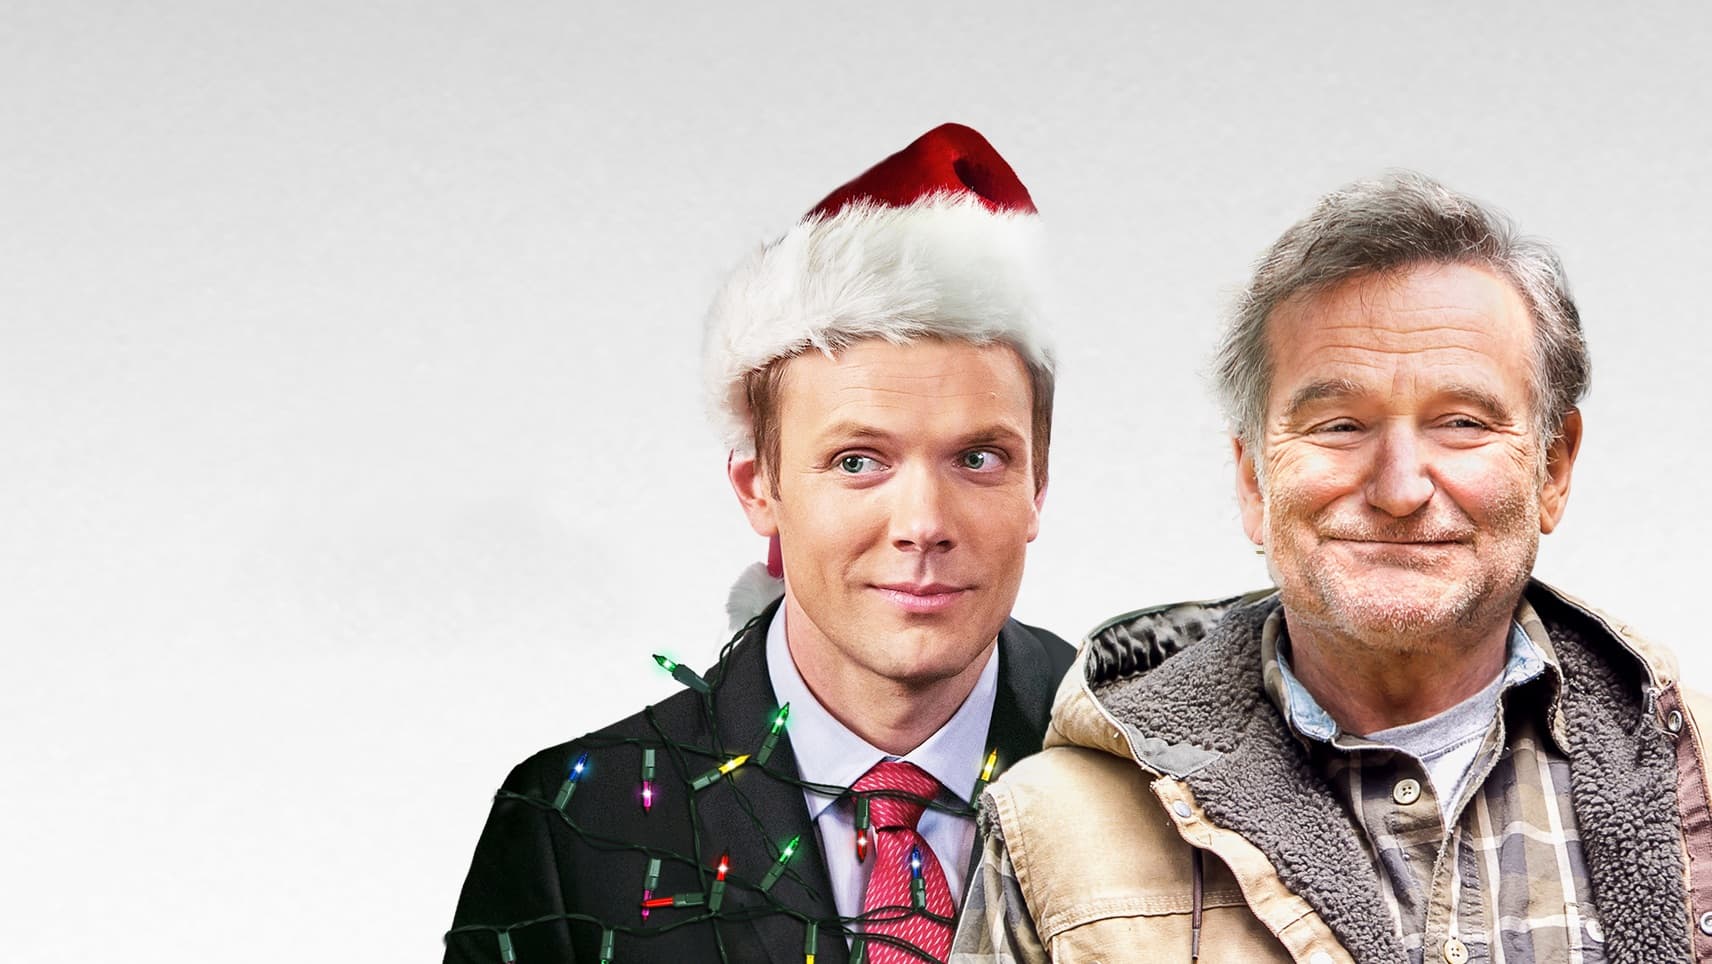 A Merry Friggin’ Christmas 2014 123movies